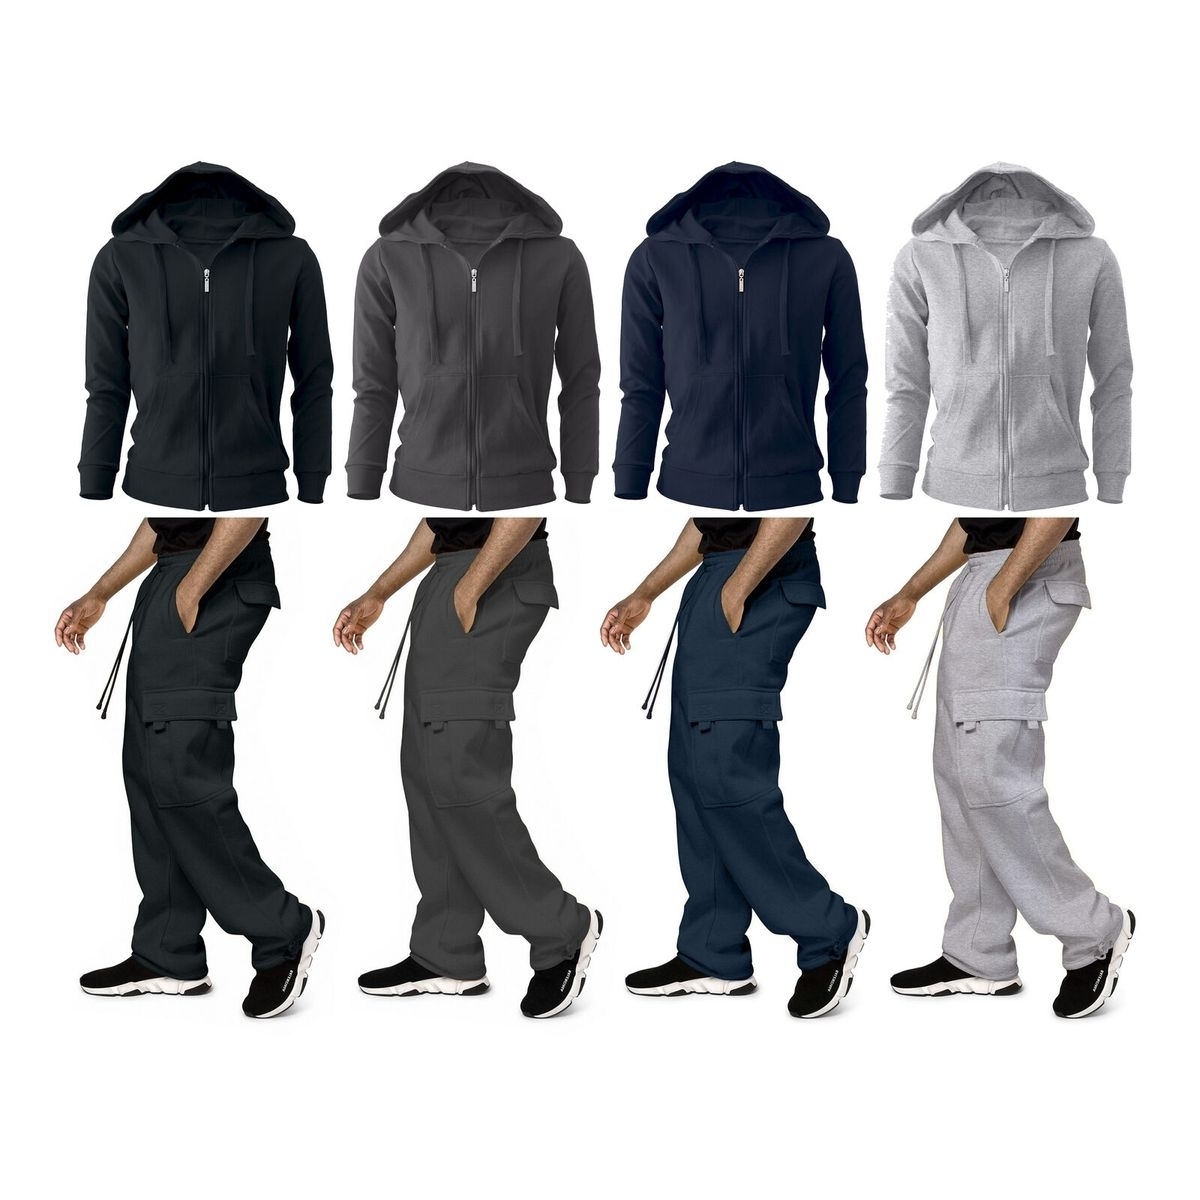 Men's Big & Tall Winter Warm Athletic Active Cozy Fleece Lined Multi-Pocket Full Zip Up Cargo Tracksuit - Grey, Medium